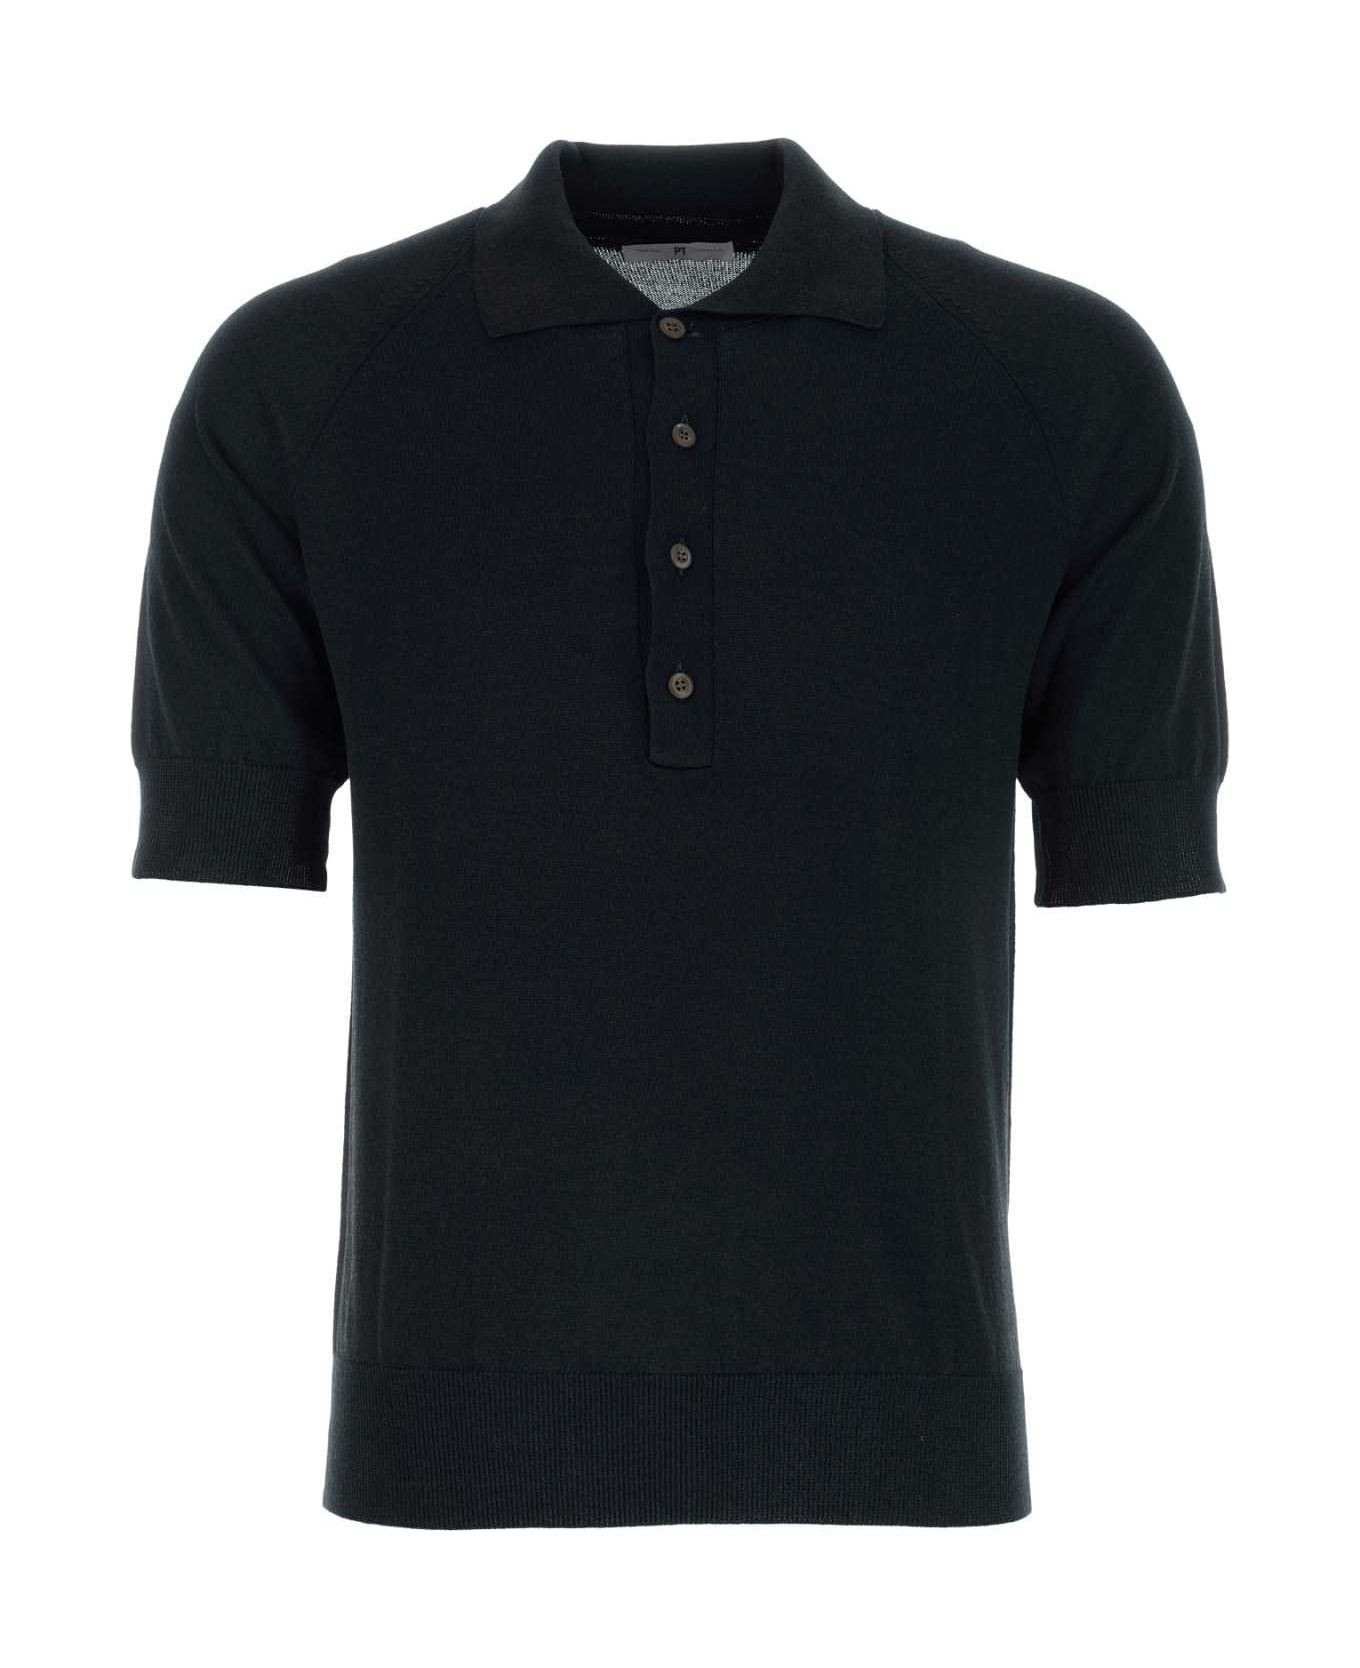 PT Torino Black Cotton Blend Polo Shirt - 0990